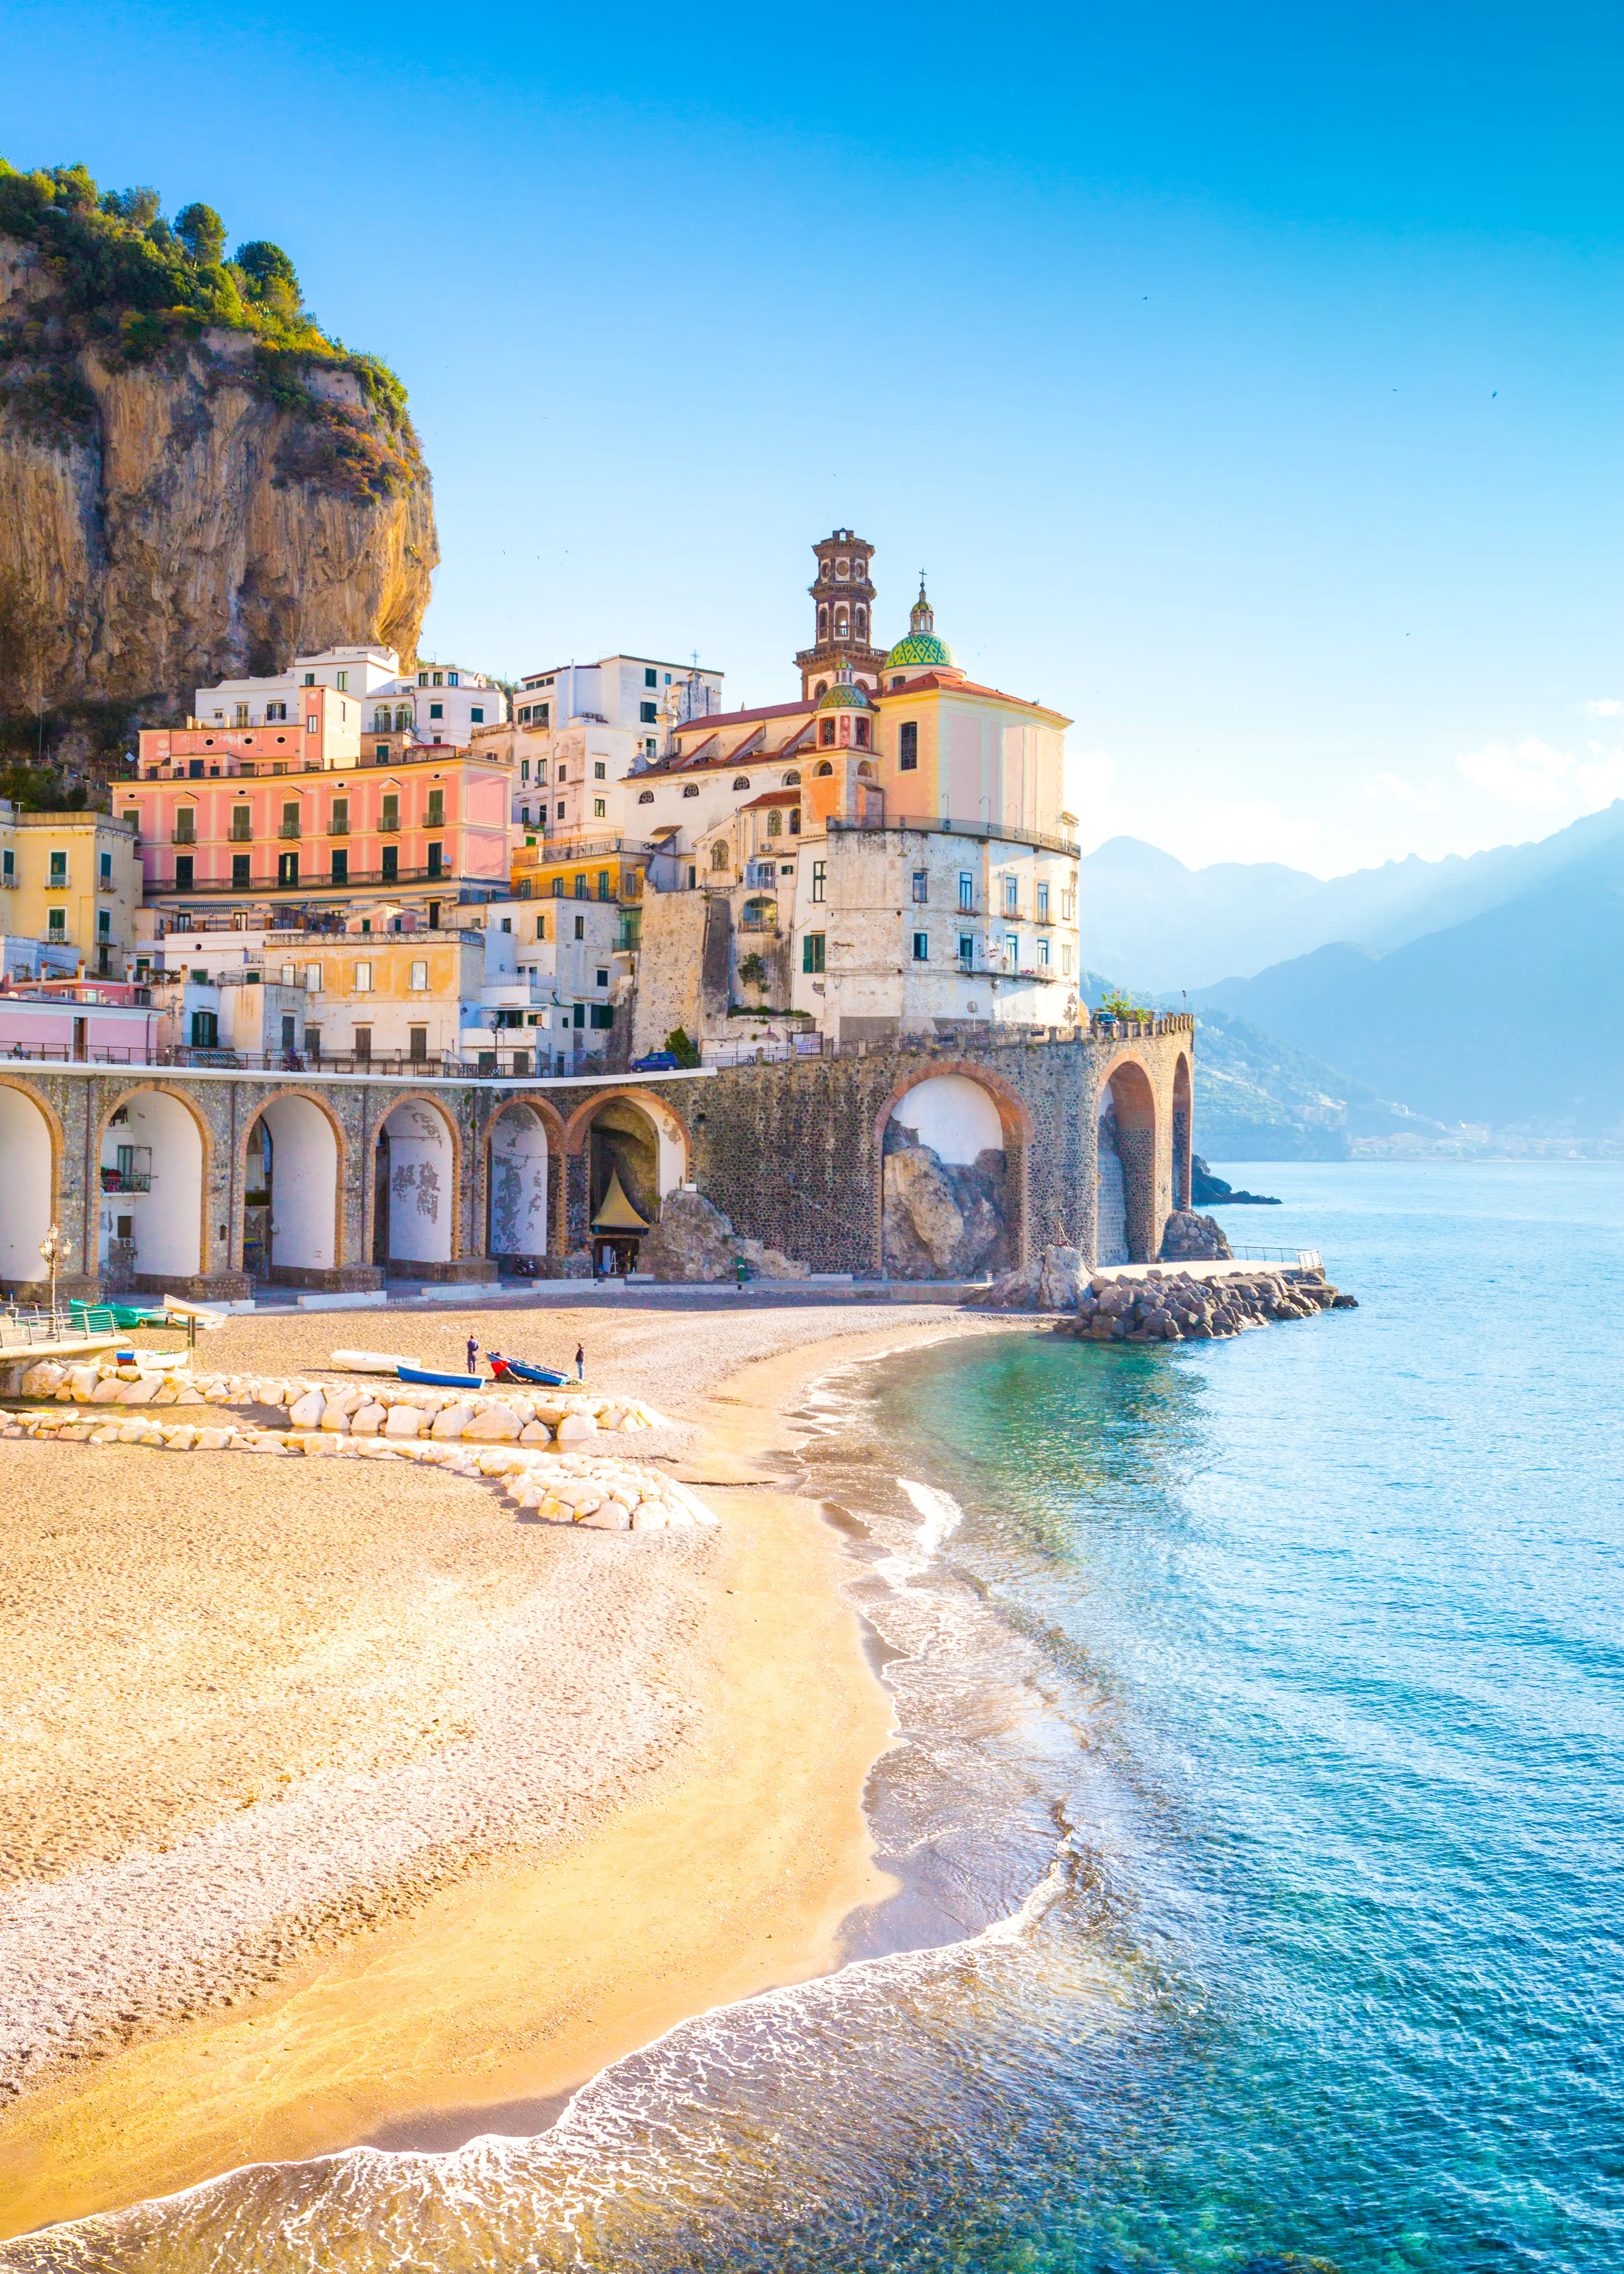 4-Day Adventure Trip to Breathtaking Amalfi Coast, Italy